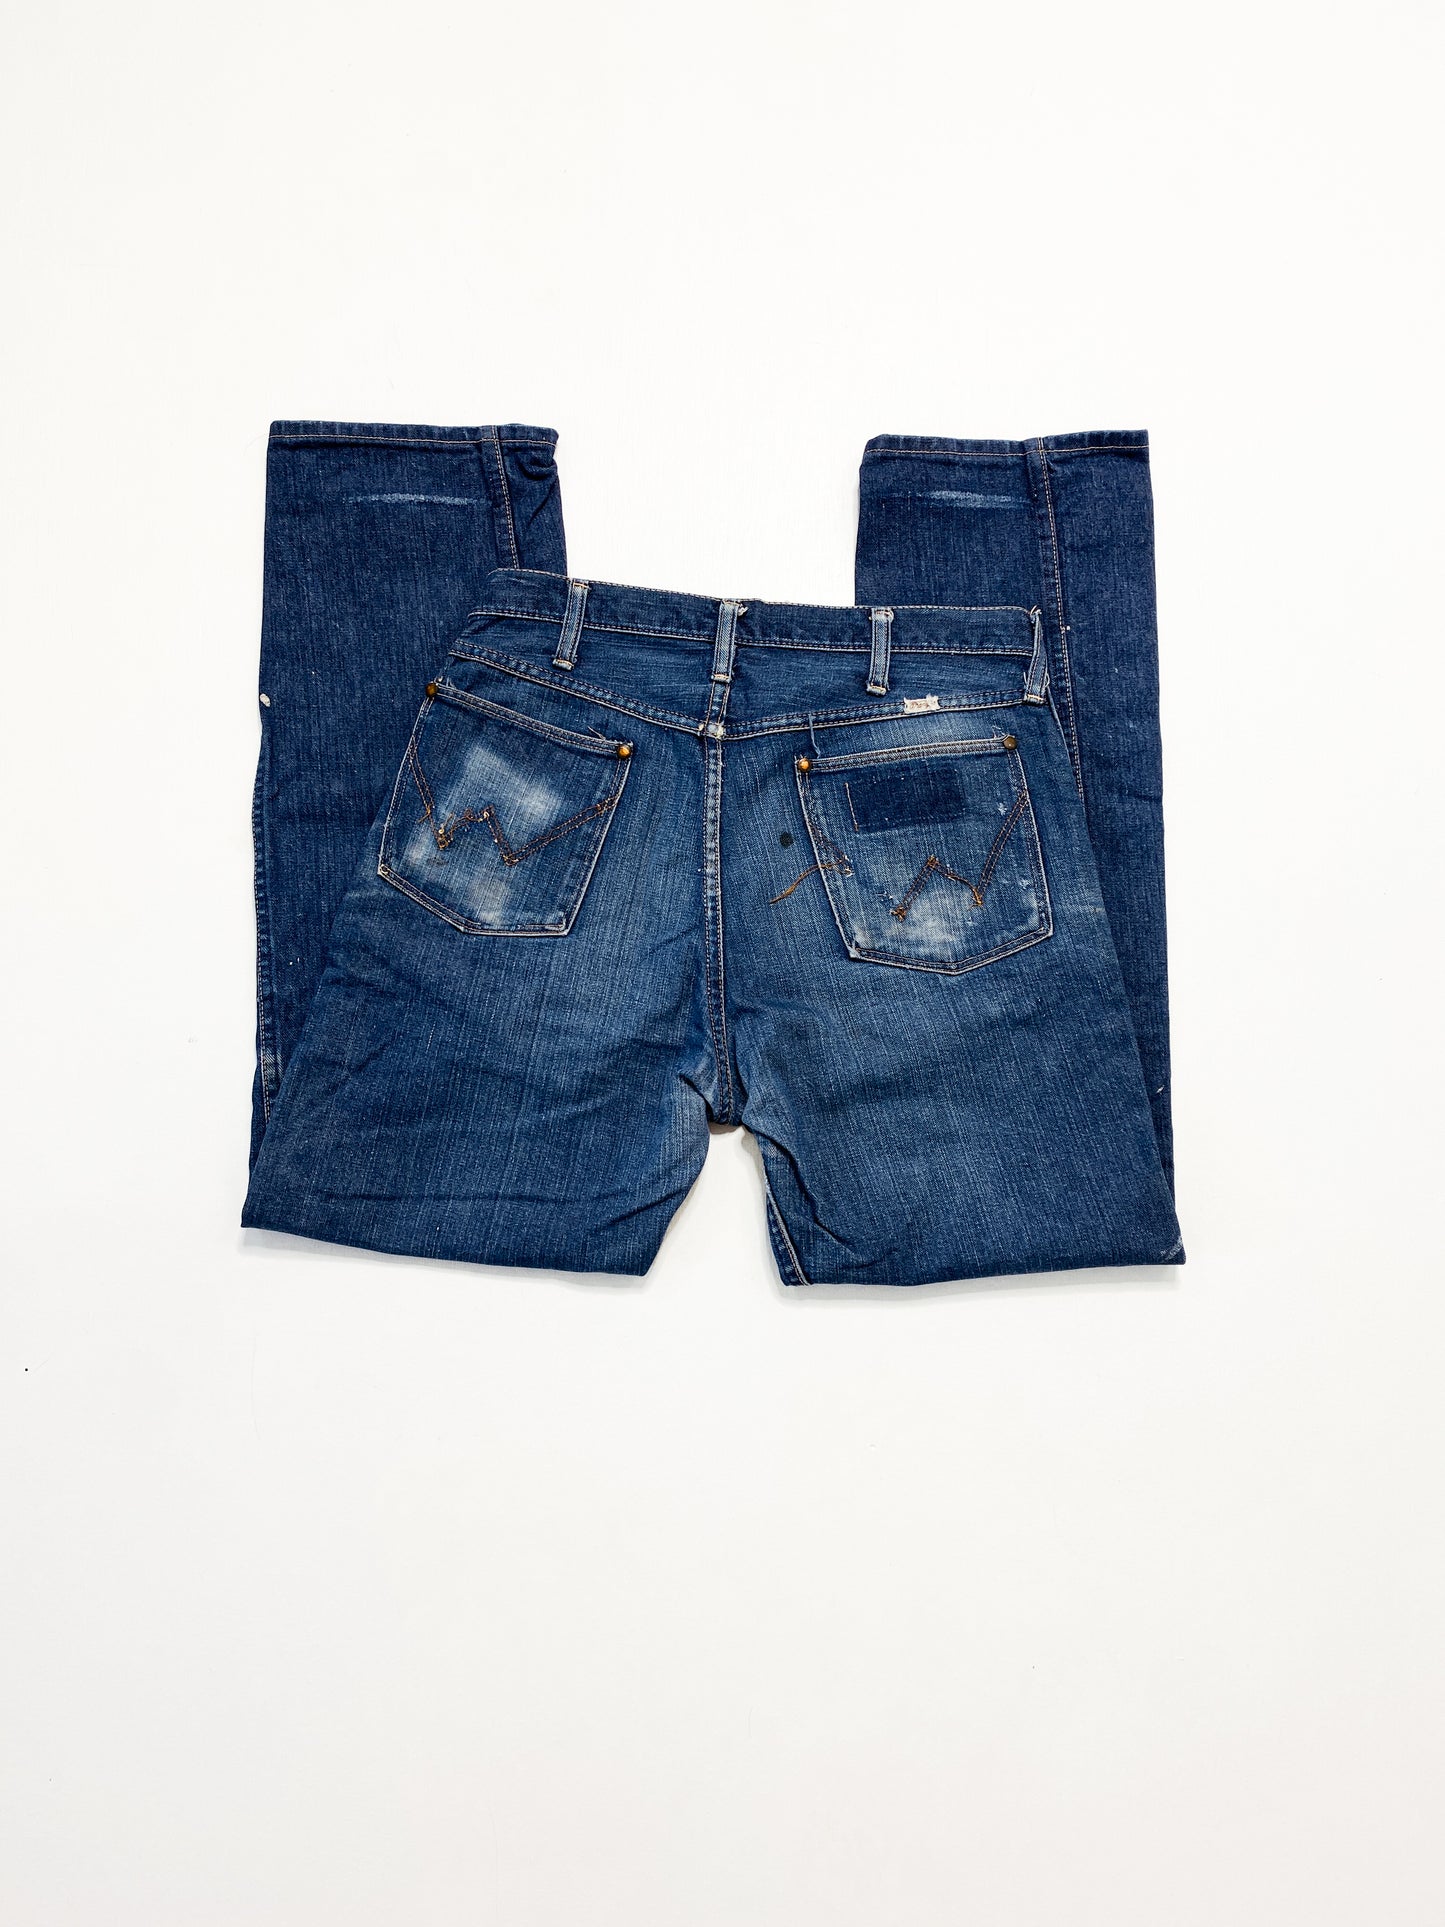 1960’s Wrangler Jeans